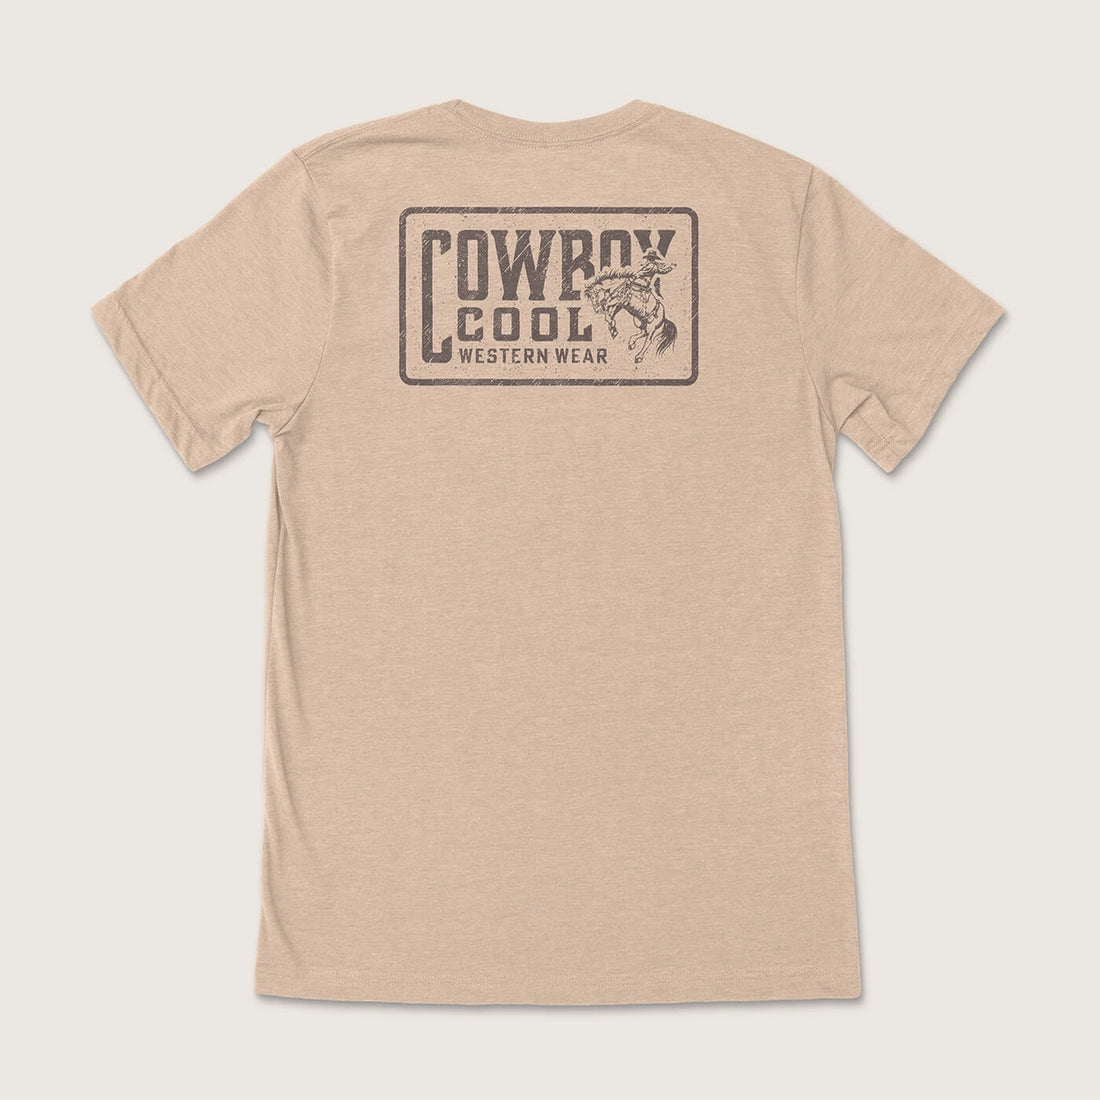 Cowboy Cool Roughrider T-shirt